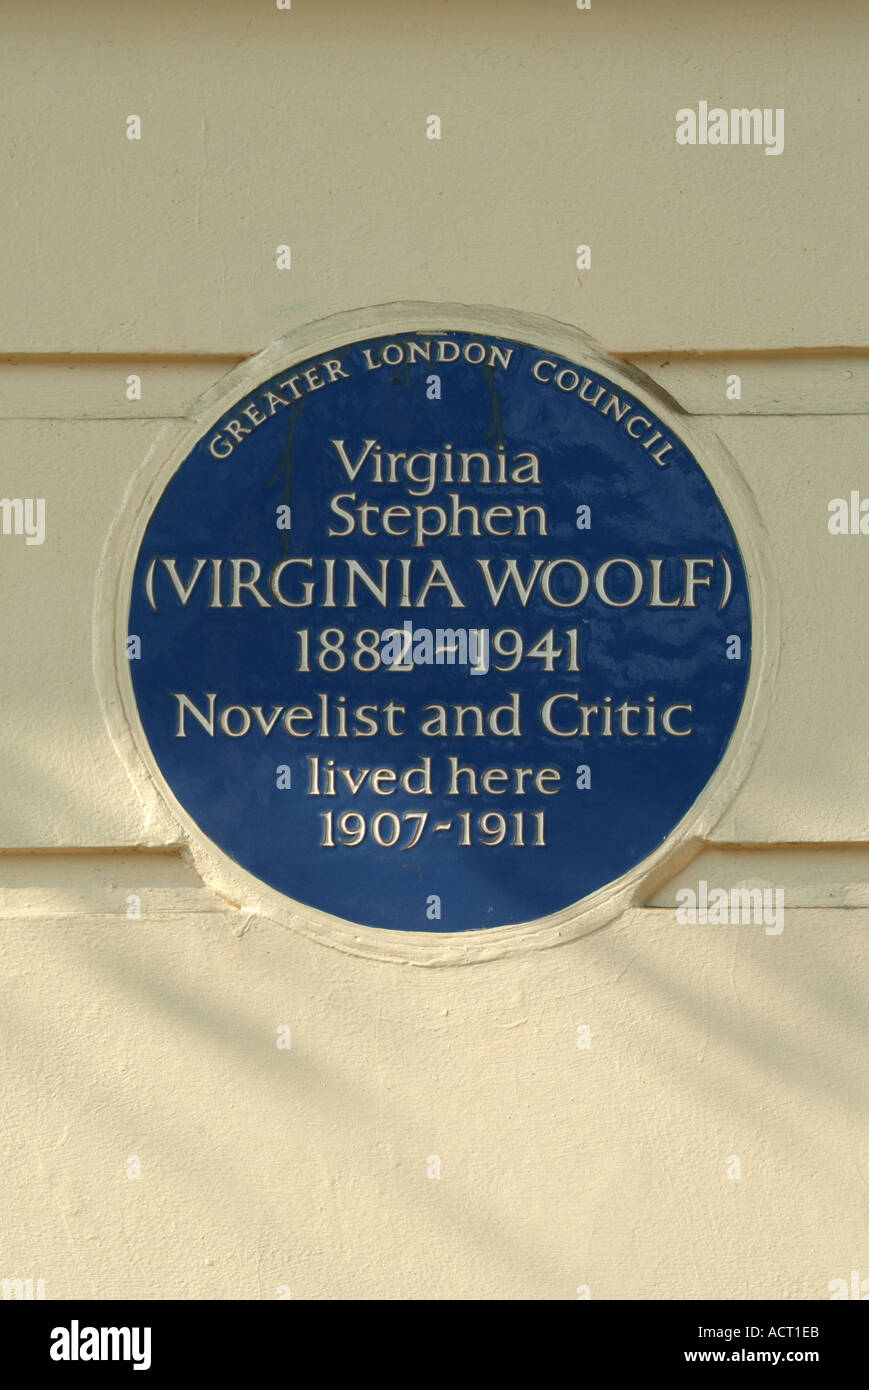 Targa informativa storica blu su un edificio Robert Adams in Fitzroy Square registrazione occupata da Virginia Stephen 1882 - 1941 Londra Inghilterra UK Foto Stock